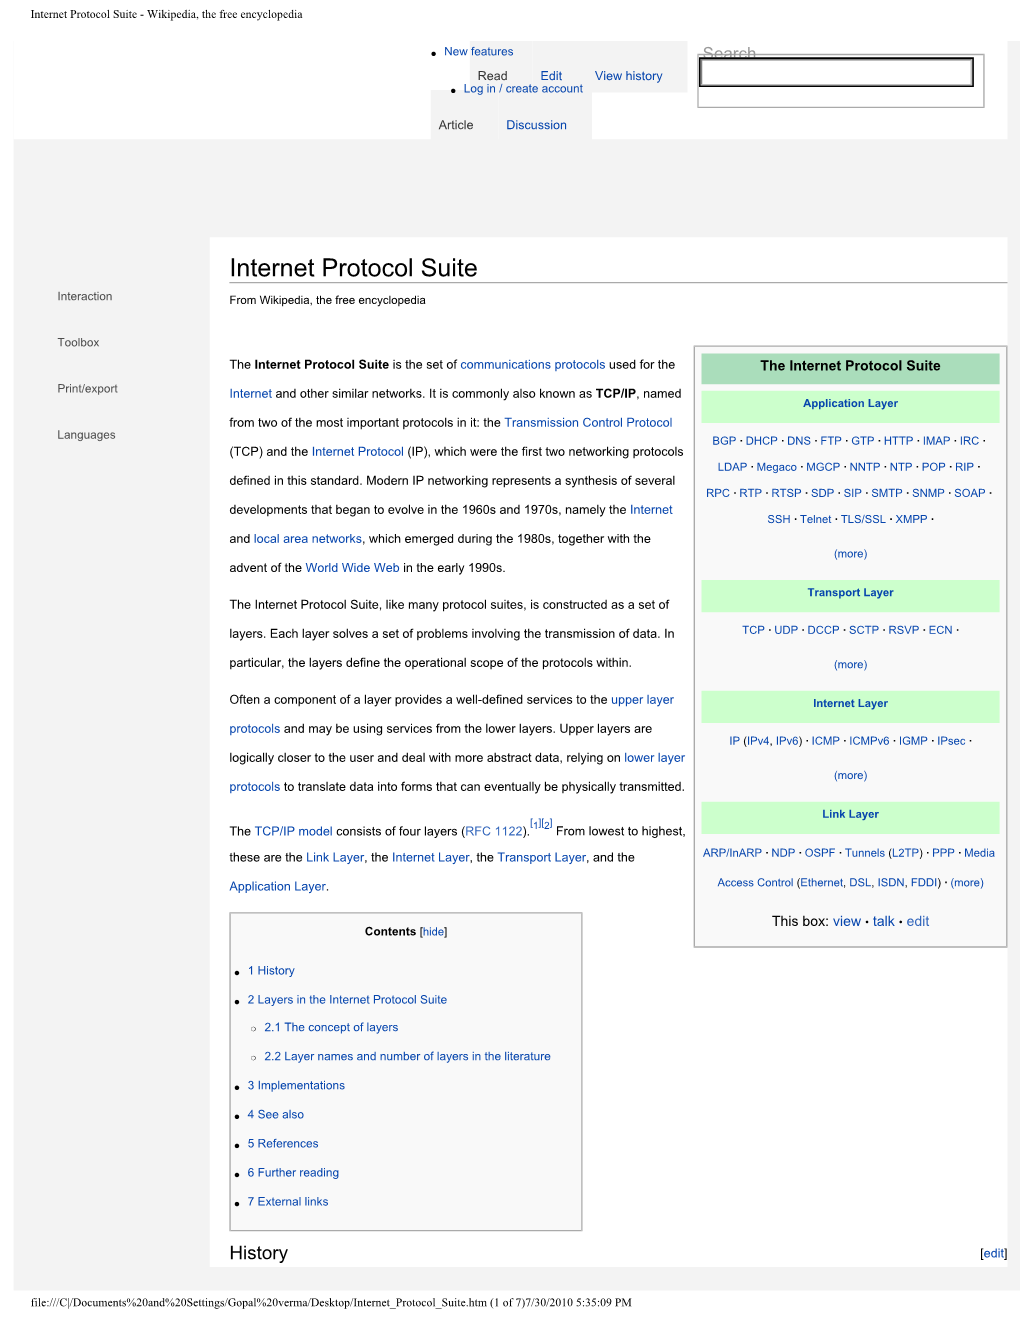 Internet Protocol Suite - Wikipedia, the Free Encyclopedia